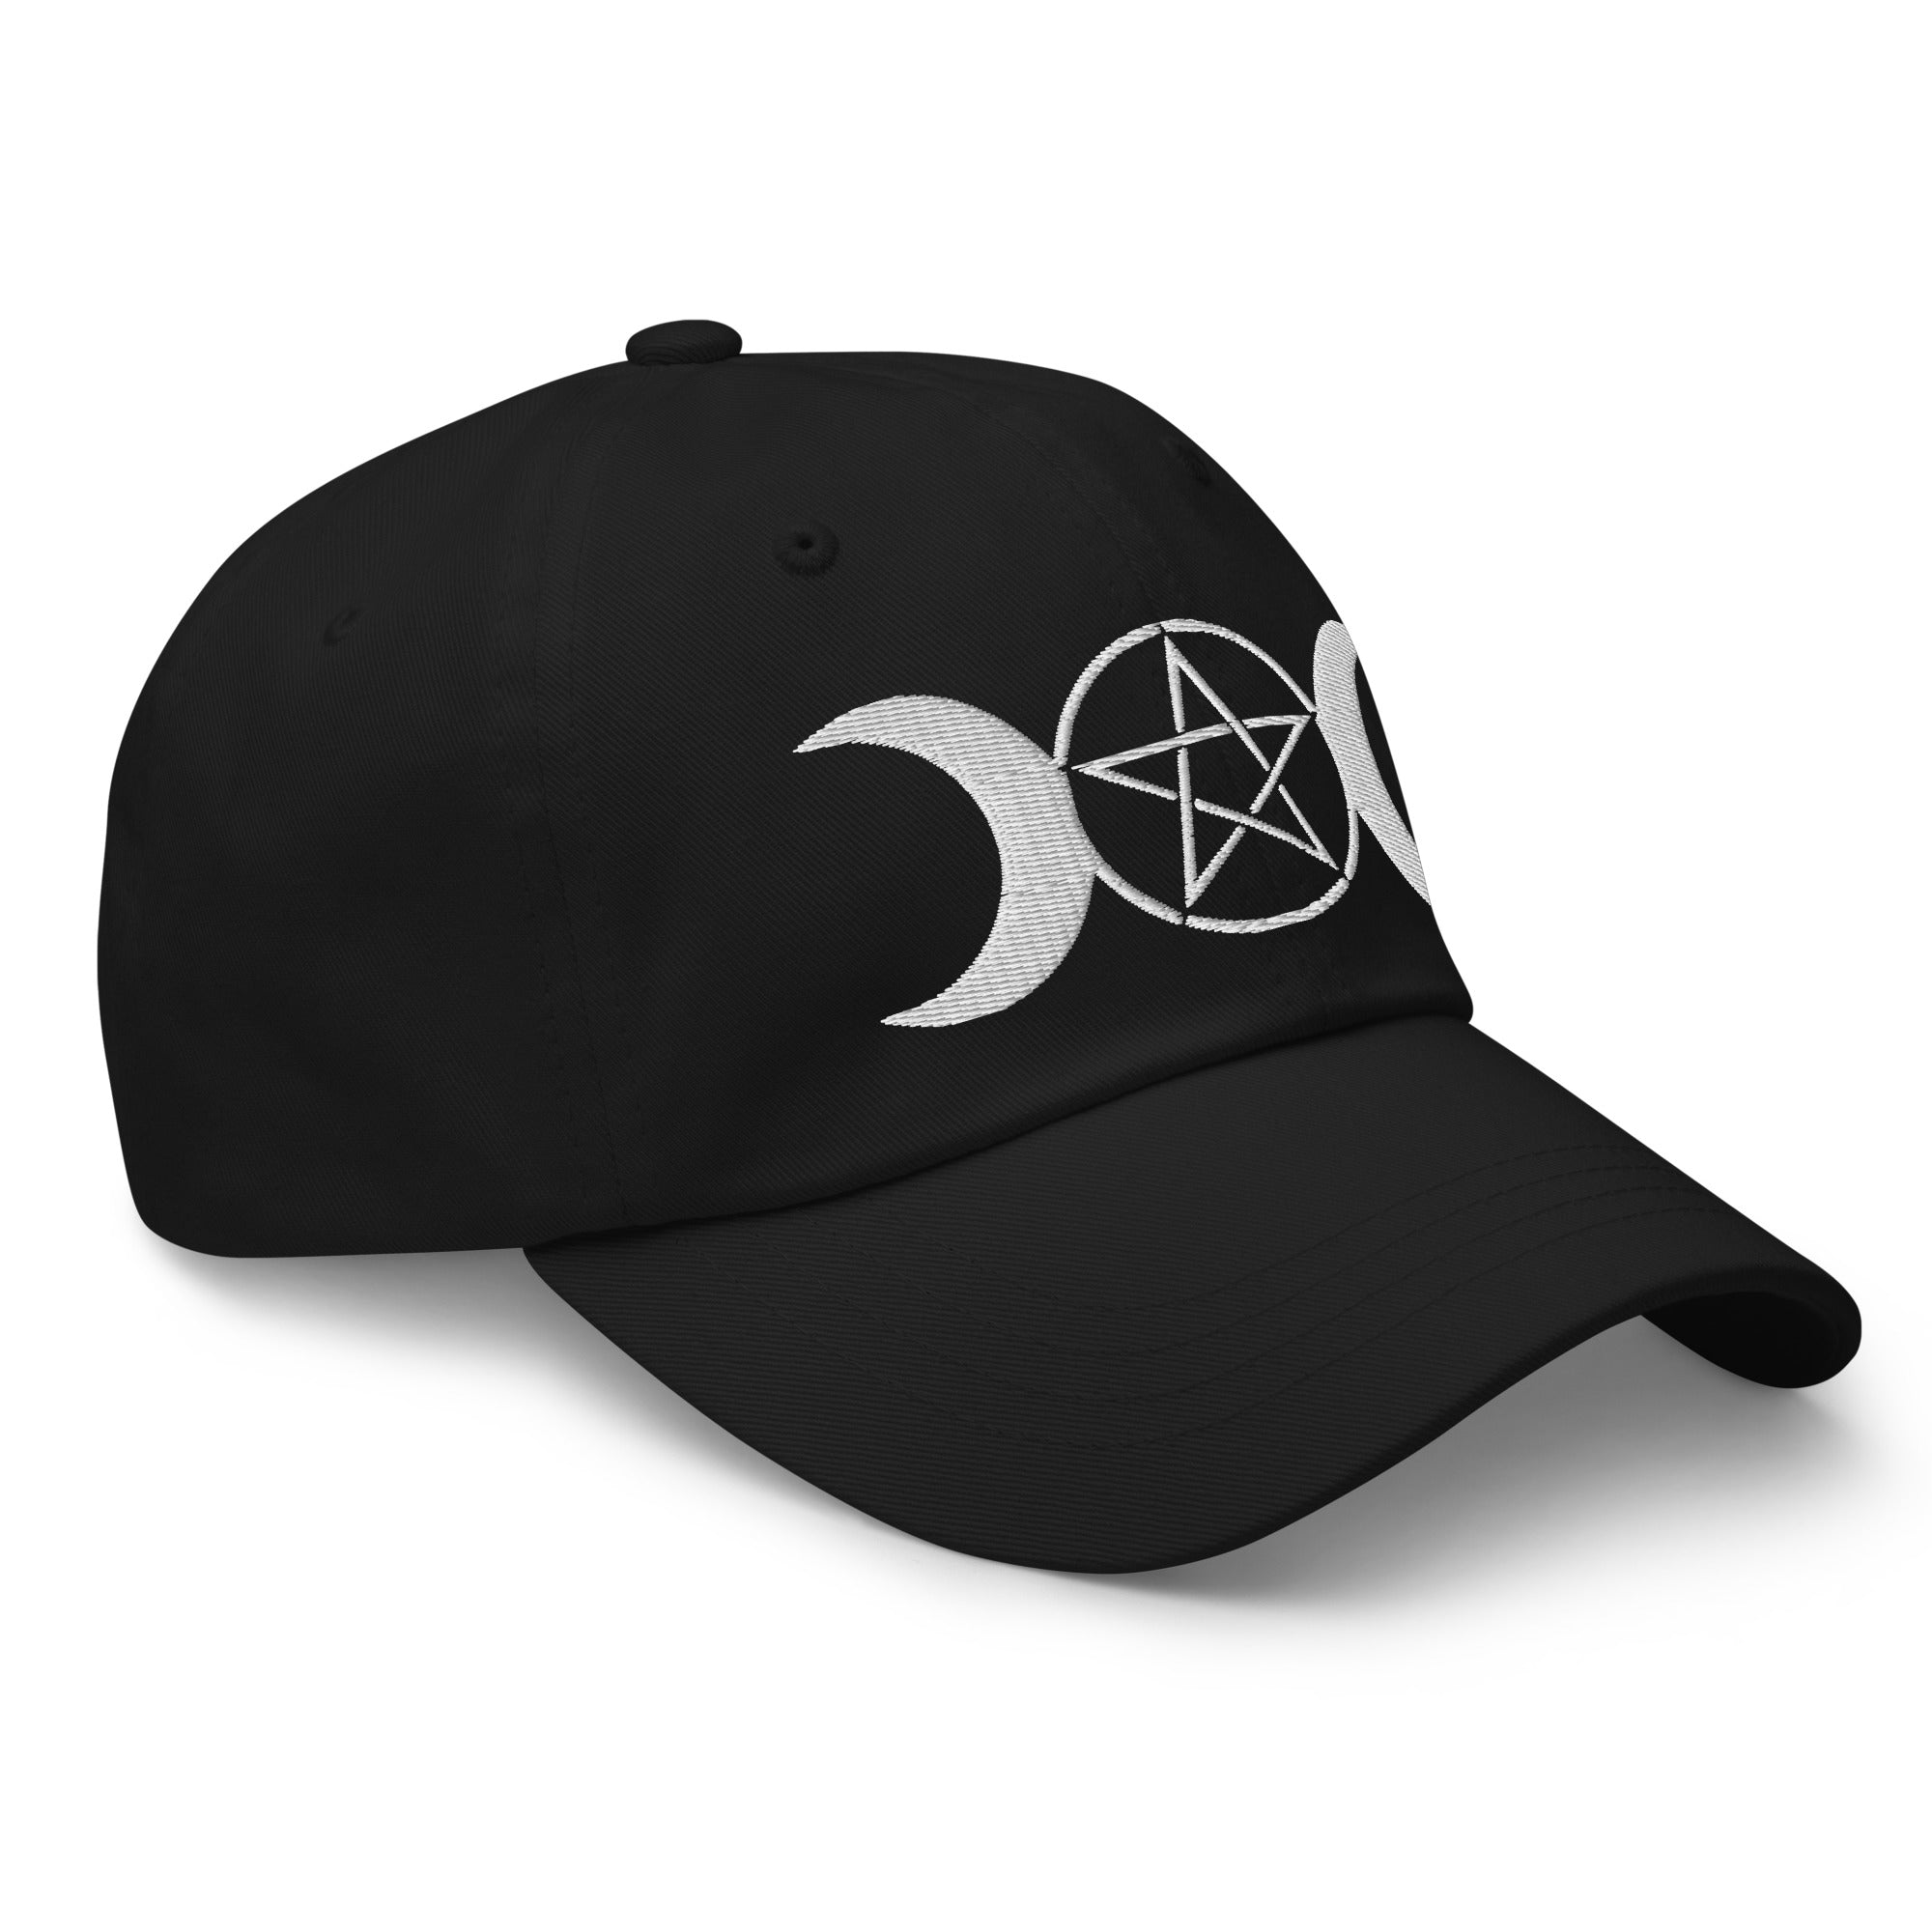 Pagan Triple Moon Goddess Symbol Embroidered Baseball Cap Wiccan Pentagram Dad hat - Edge of Life Designs